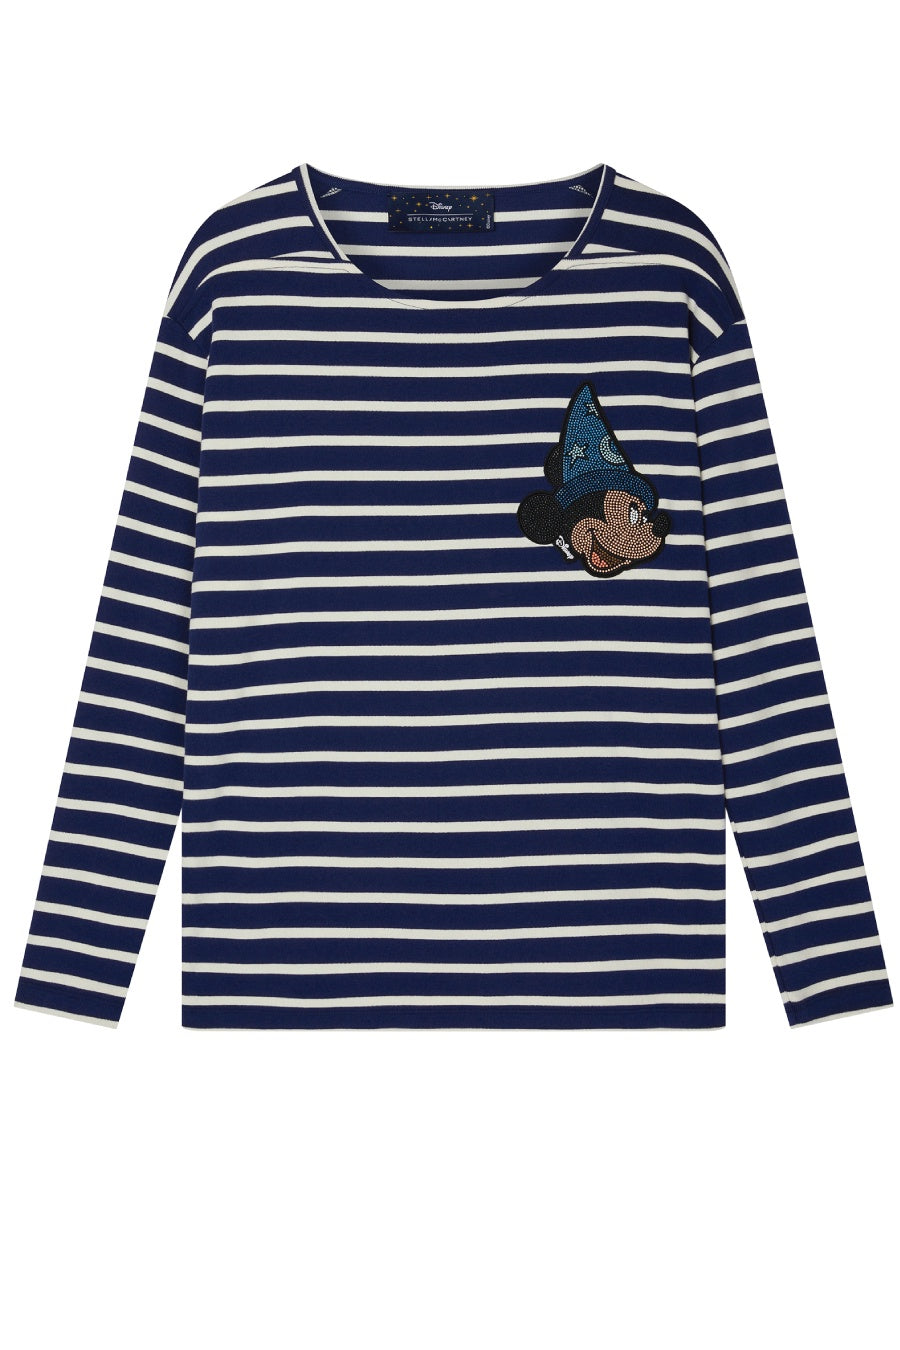 Stella McCartney x Disney Mickey Breton Stripe T-Shirt - White/ Blue